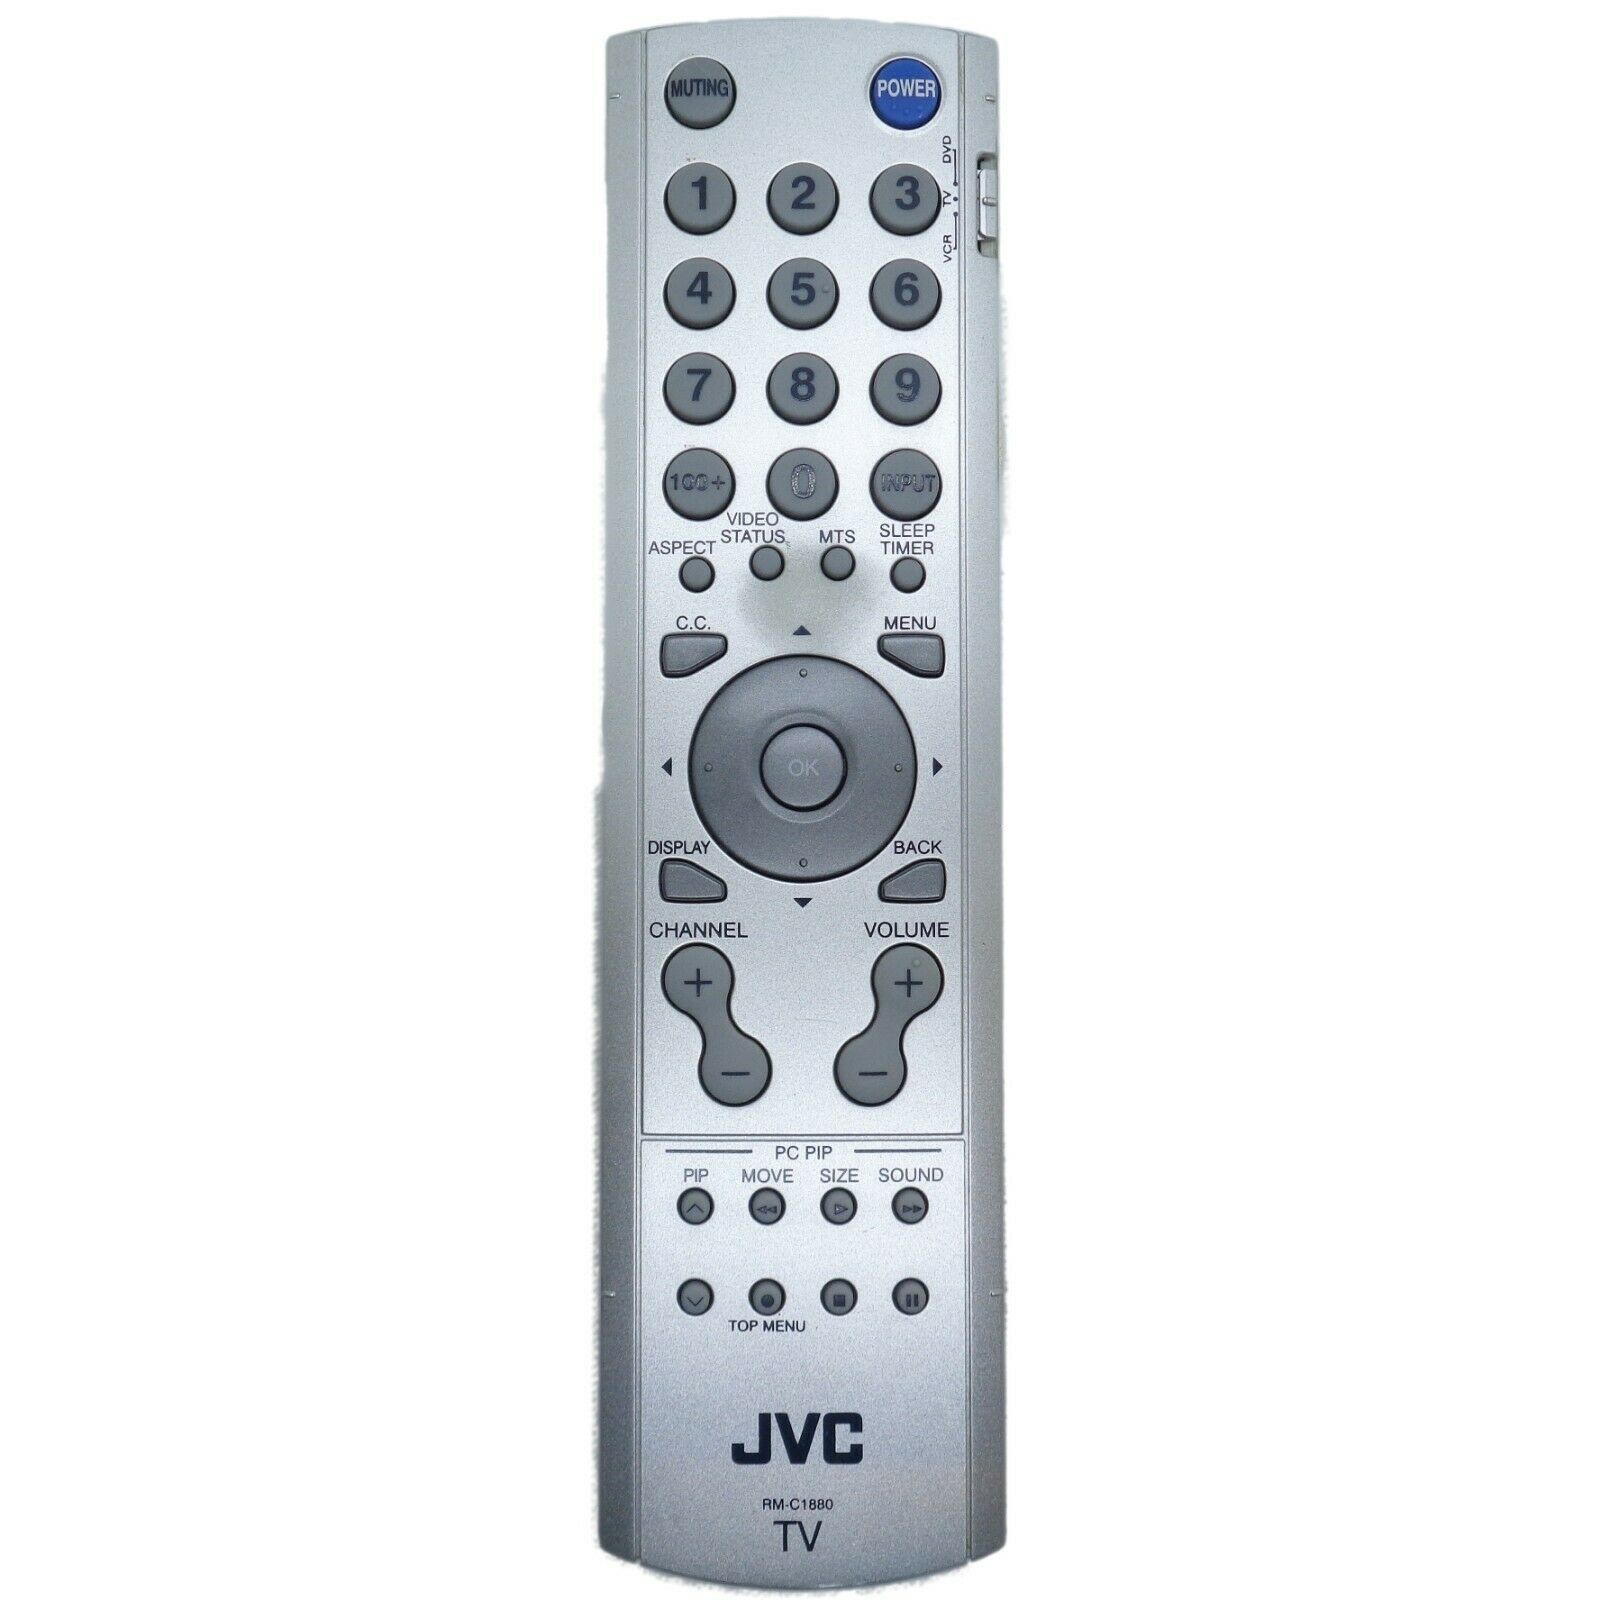 JVC RM-C1880 Factory Original TV Remote LT-17X576, LT-23X576, See Notes & Photos - $10.19